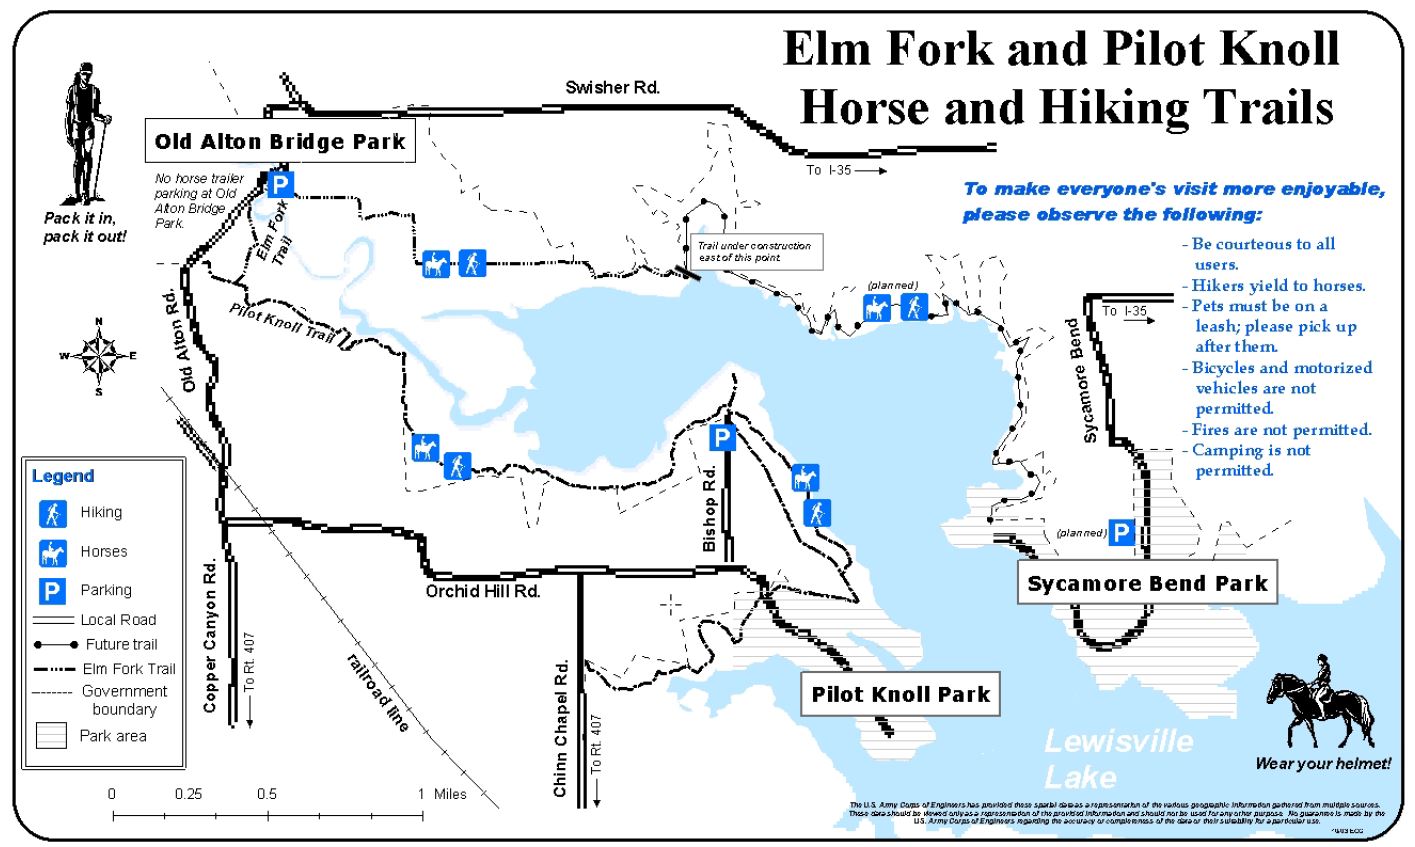 Elm Fork Trail